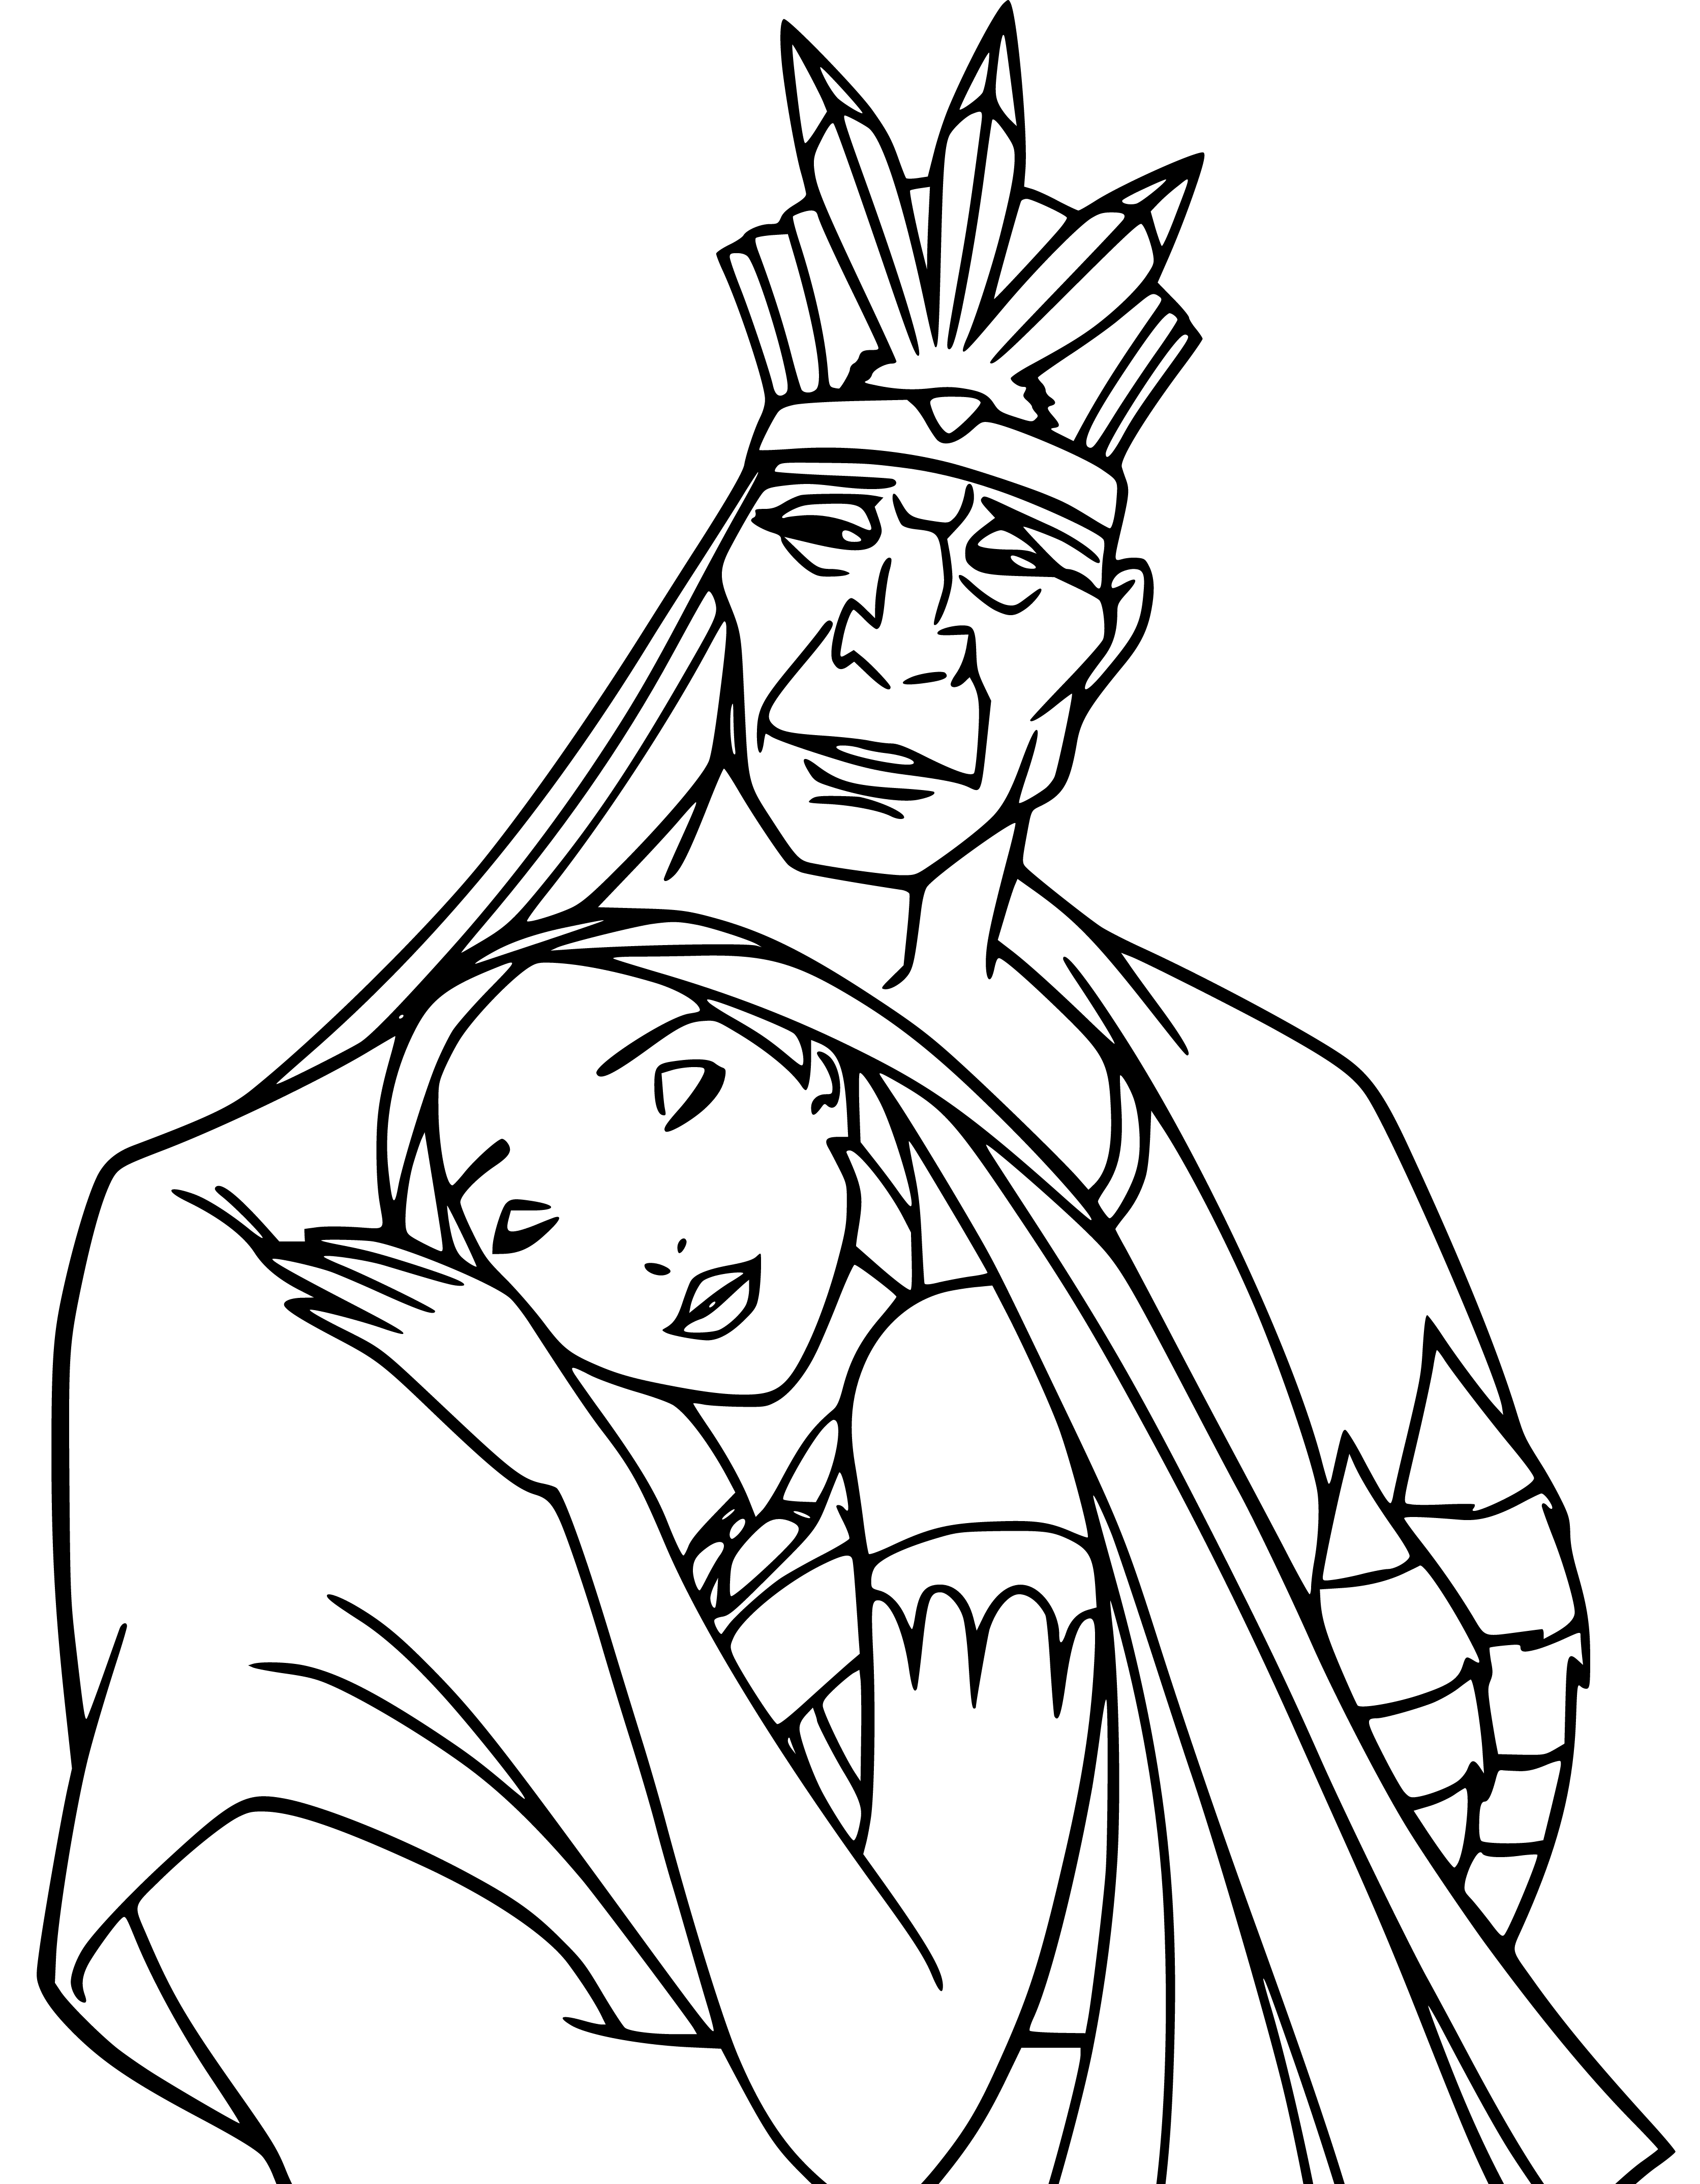 Pocahantos and Chief-Powhatan Coloring Pages for Kids - SheetalColor.com